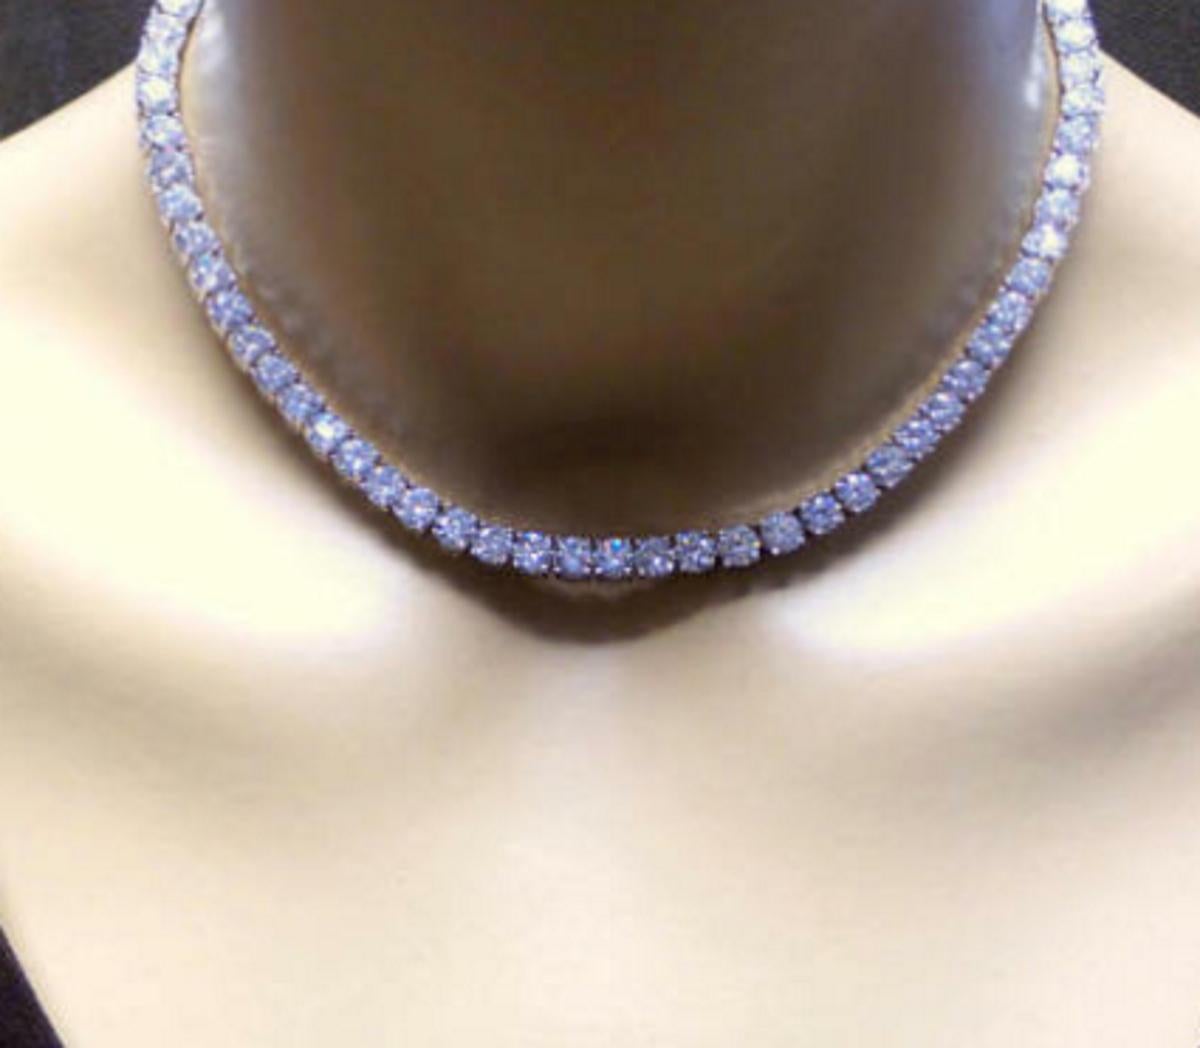 20 carat tennis necklace